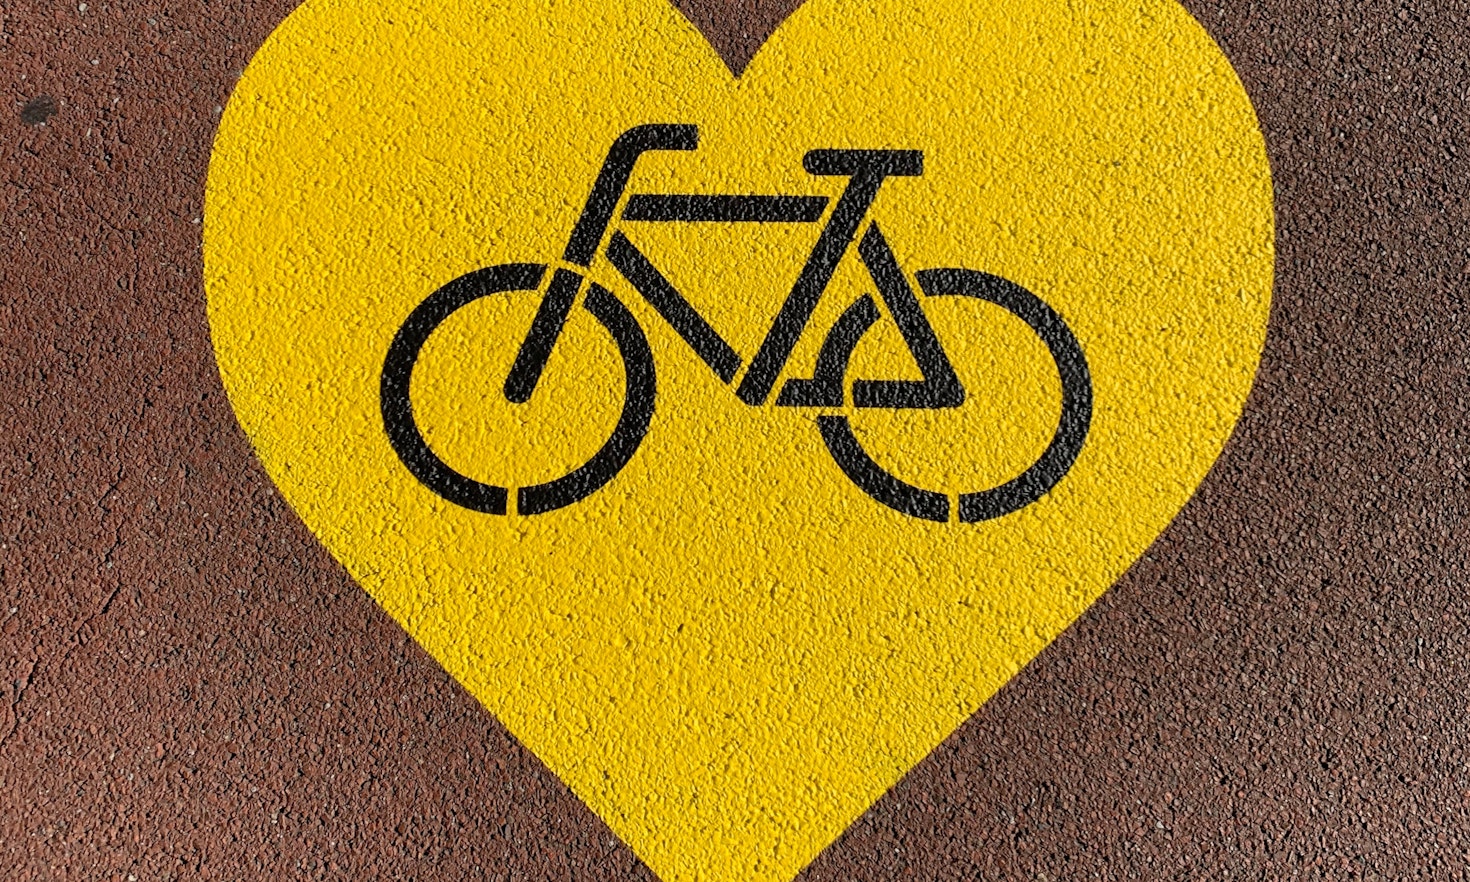 Biking in Bolzano/Bozen, Italy versus London, Ontario